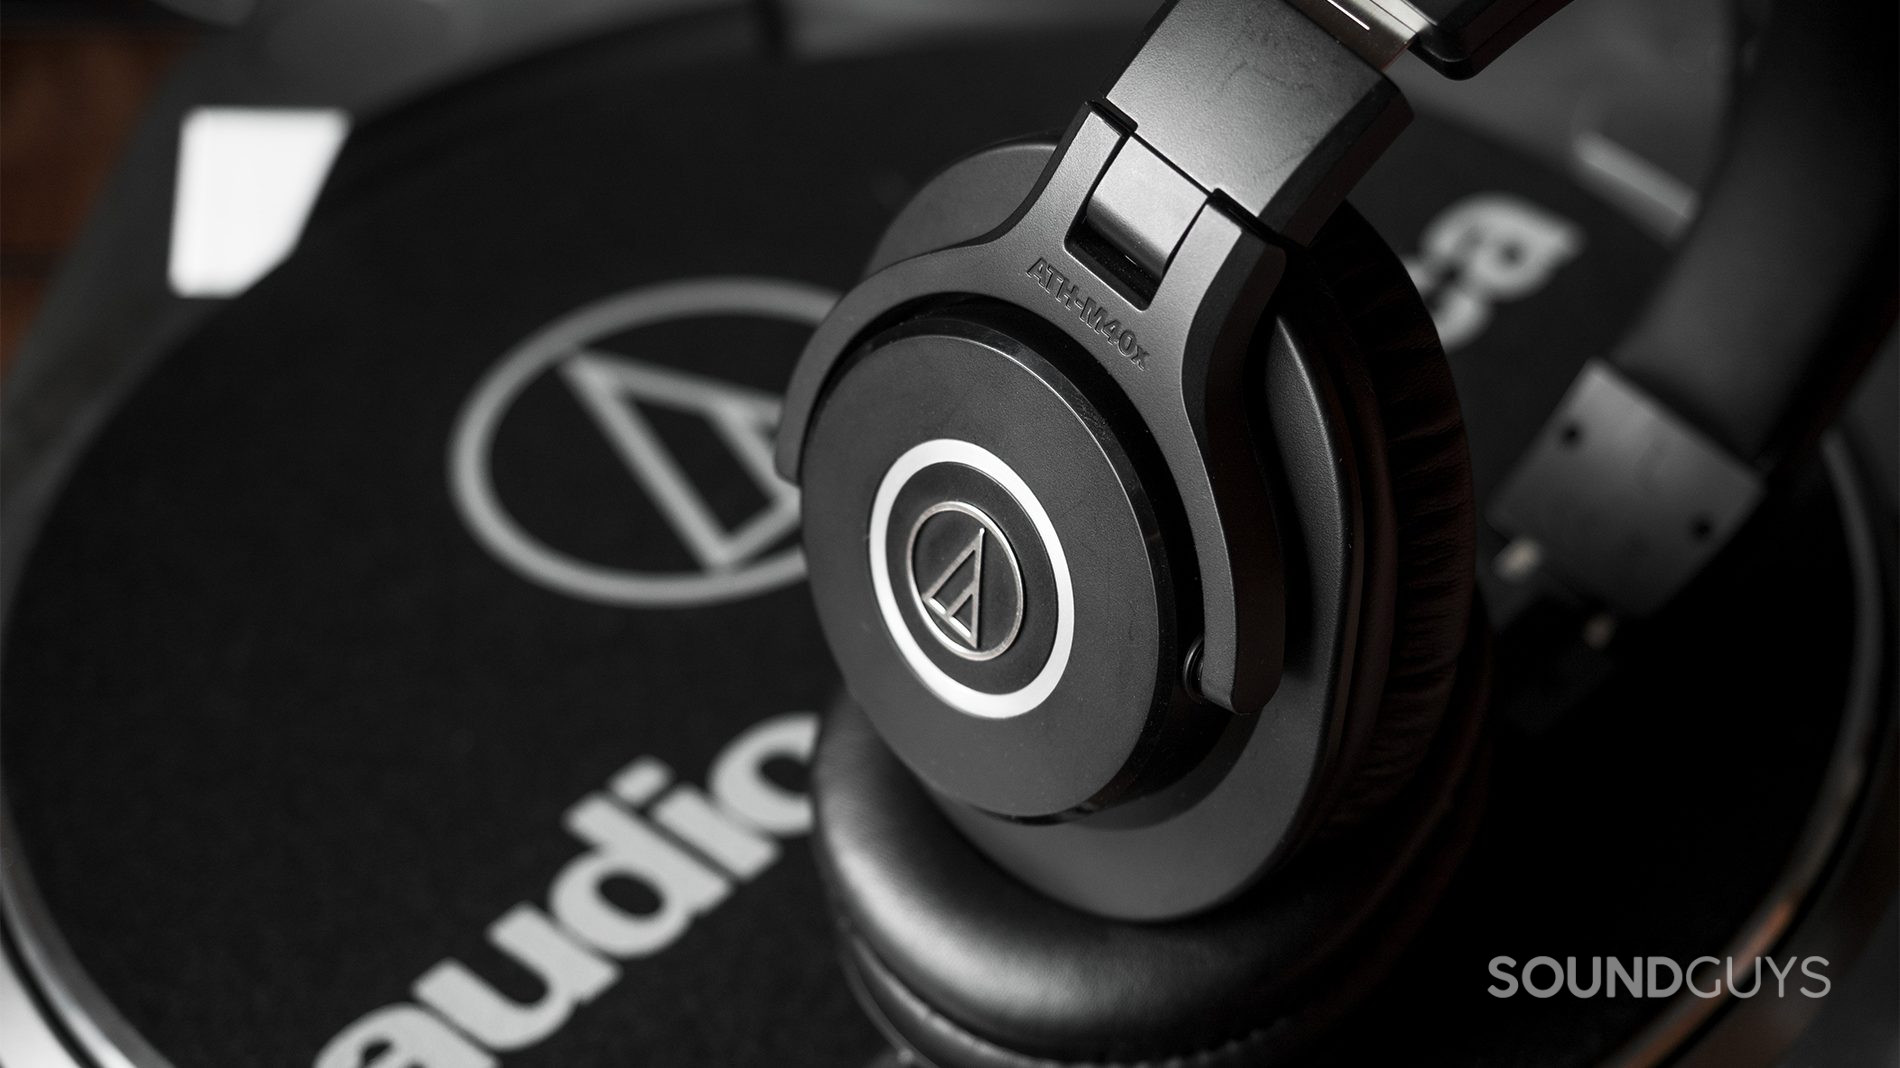 Audio-Technica ATH-M40x review: Stellar studio headphones - SoundGuys